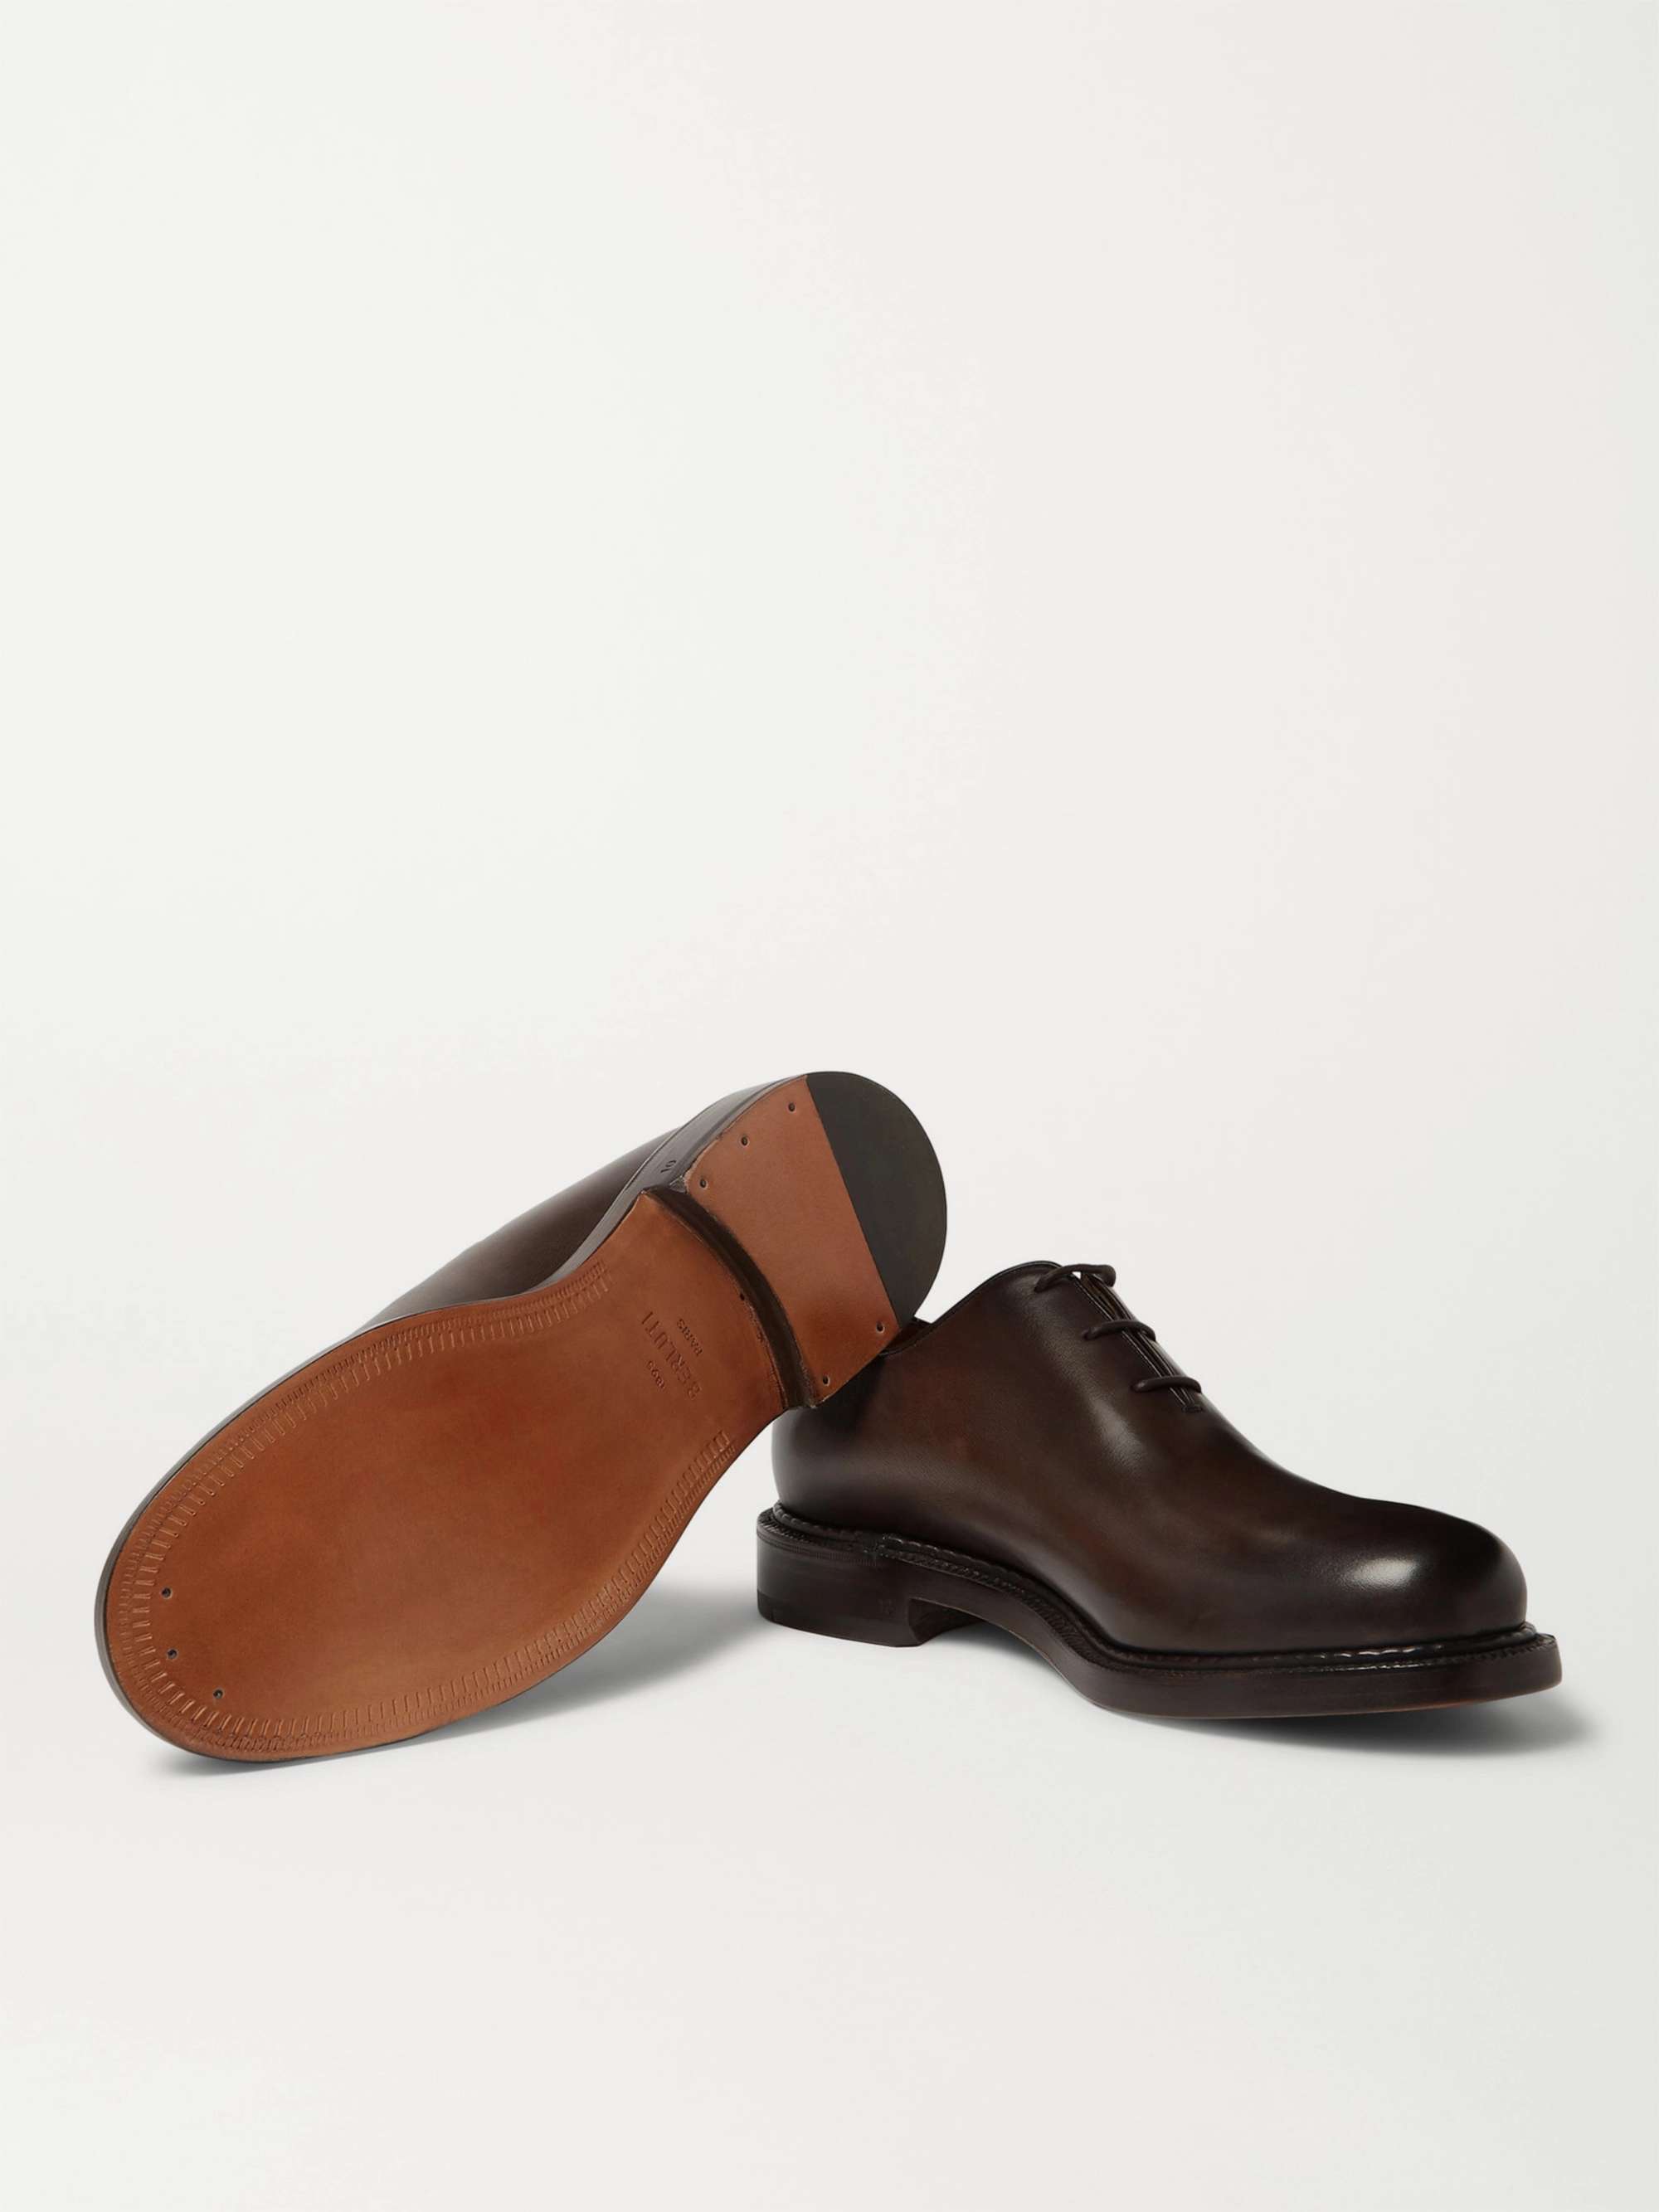 BERLUTI 1895 Venezia Leather Oxford Shoes